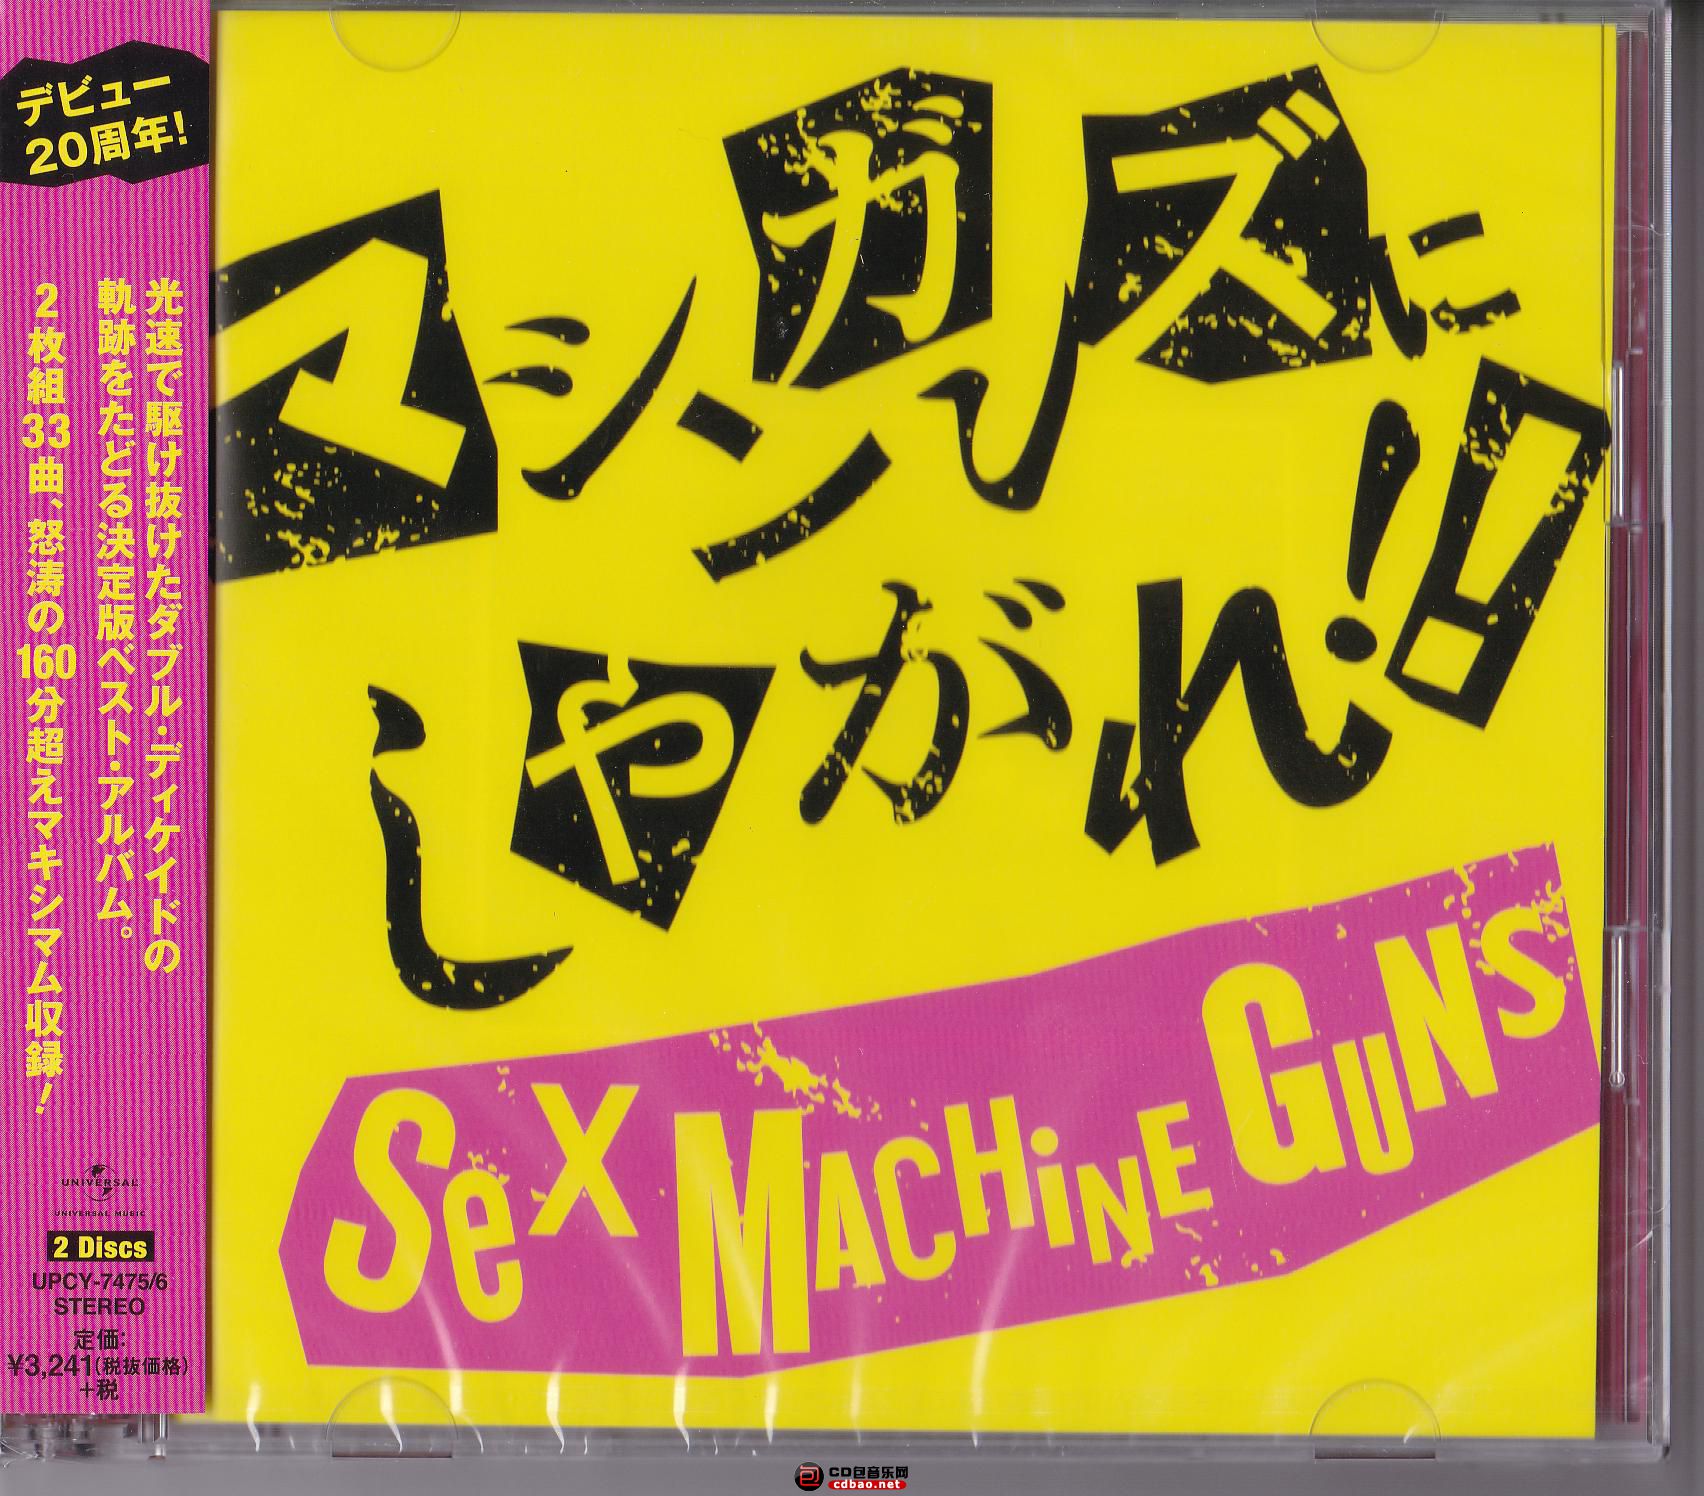 Sex Machineguns 2018 - 0001.jpg